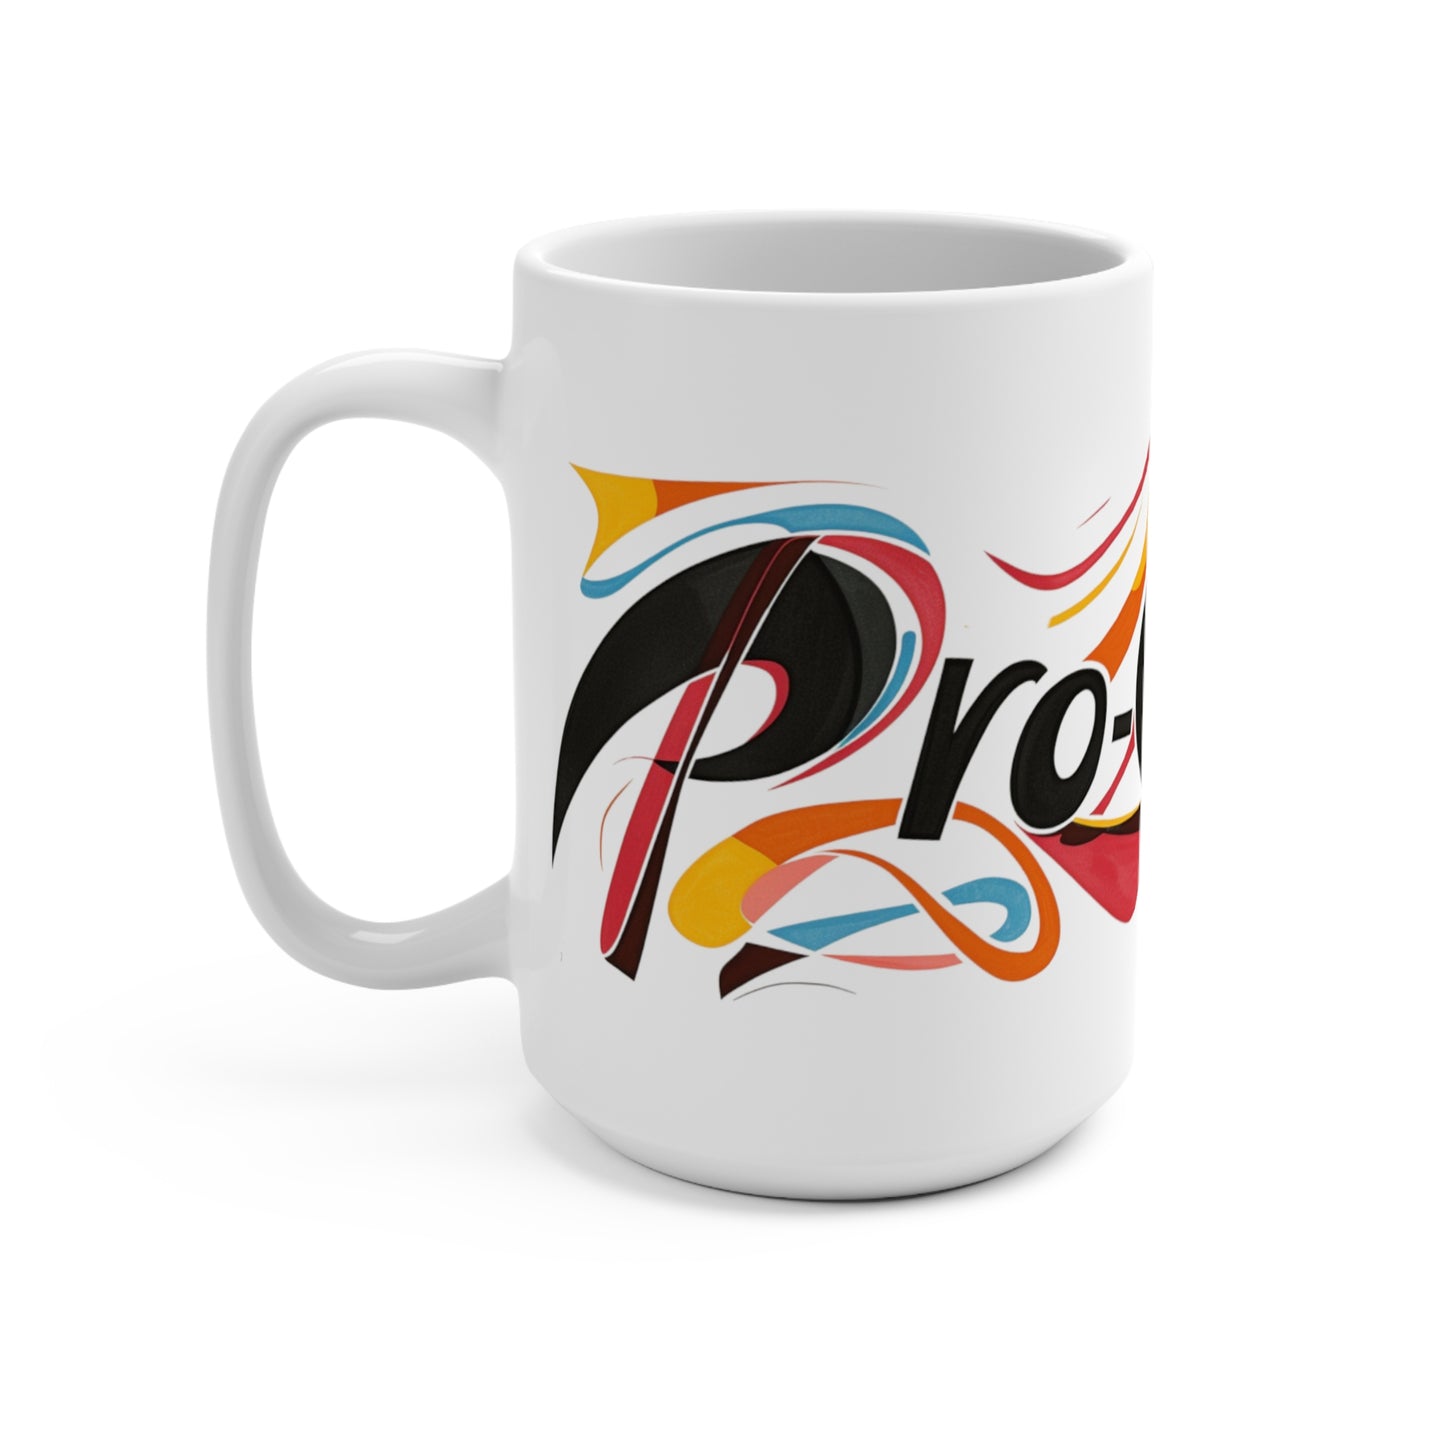 Pro-Choice Mug (15oz) Women's Rights Reproductive Rights mug Coffee Tea Pro Choice Feminist Mug